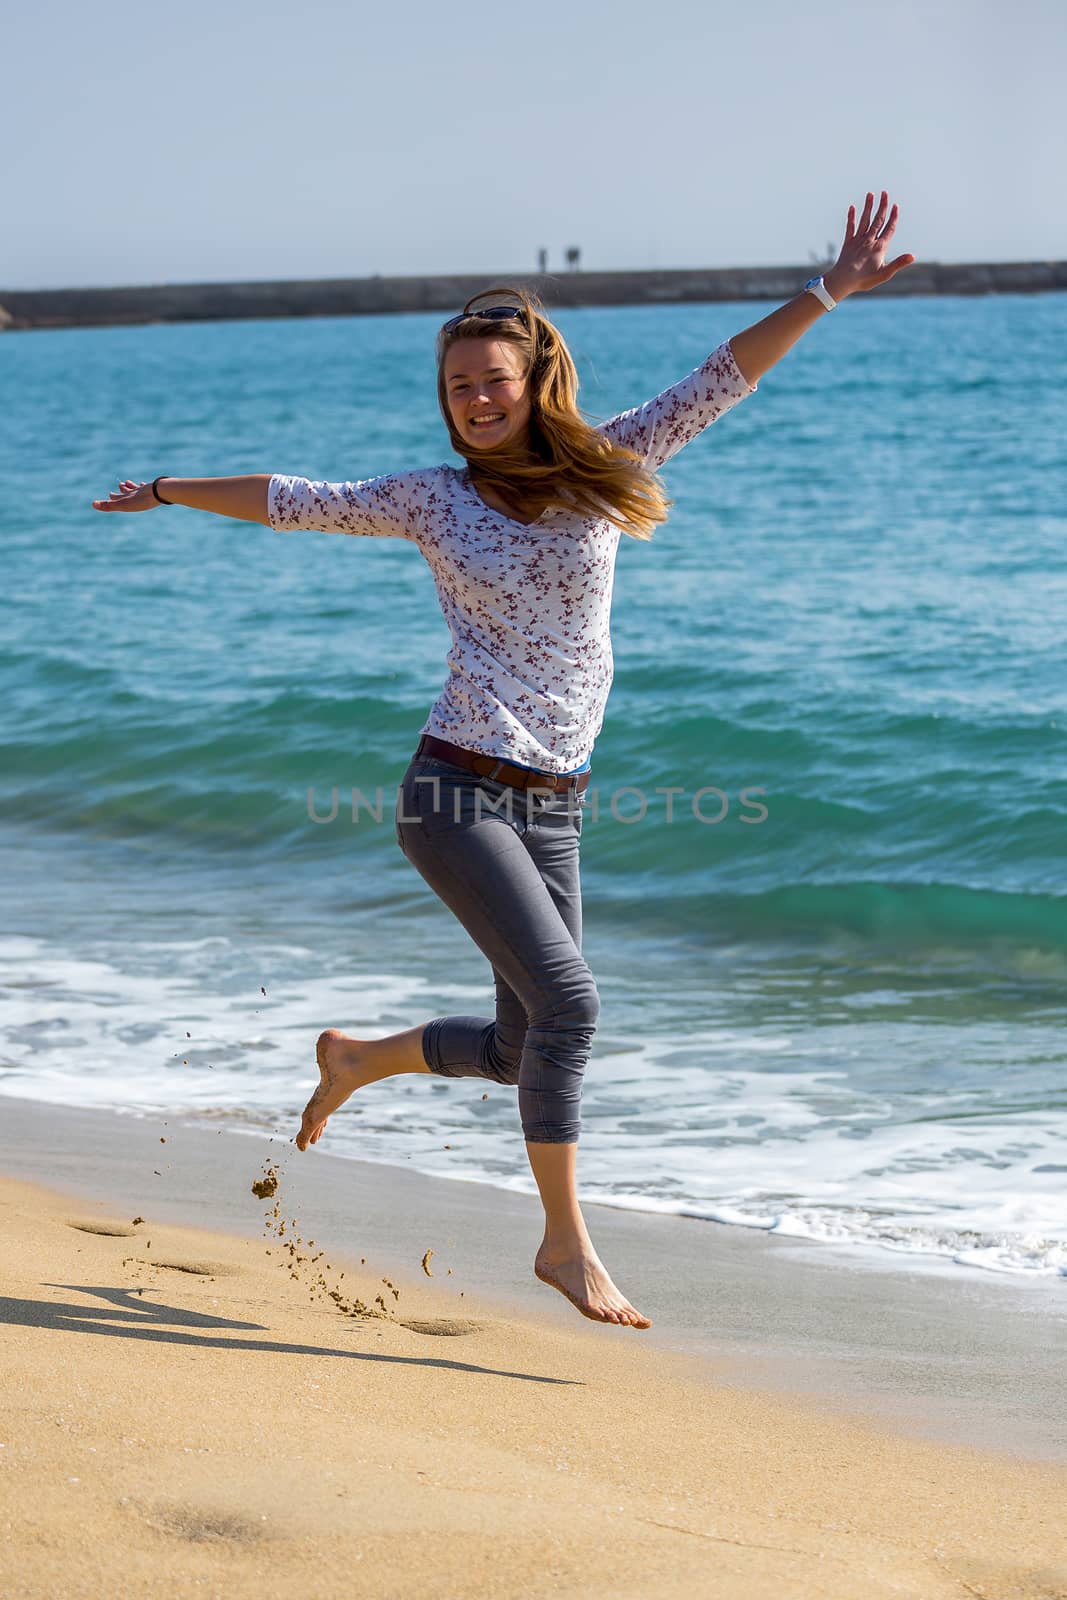 Pretty girl jumping near the lake by Digoarpi